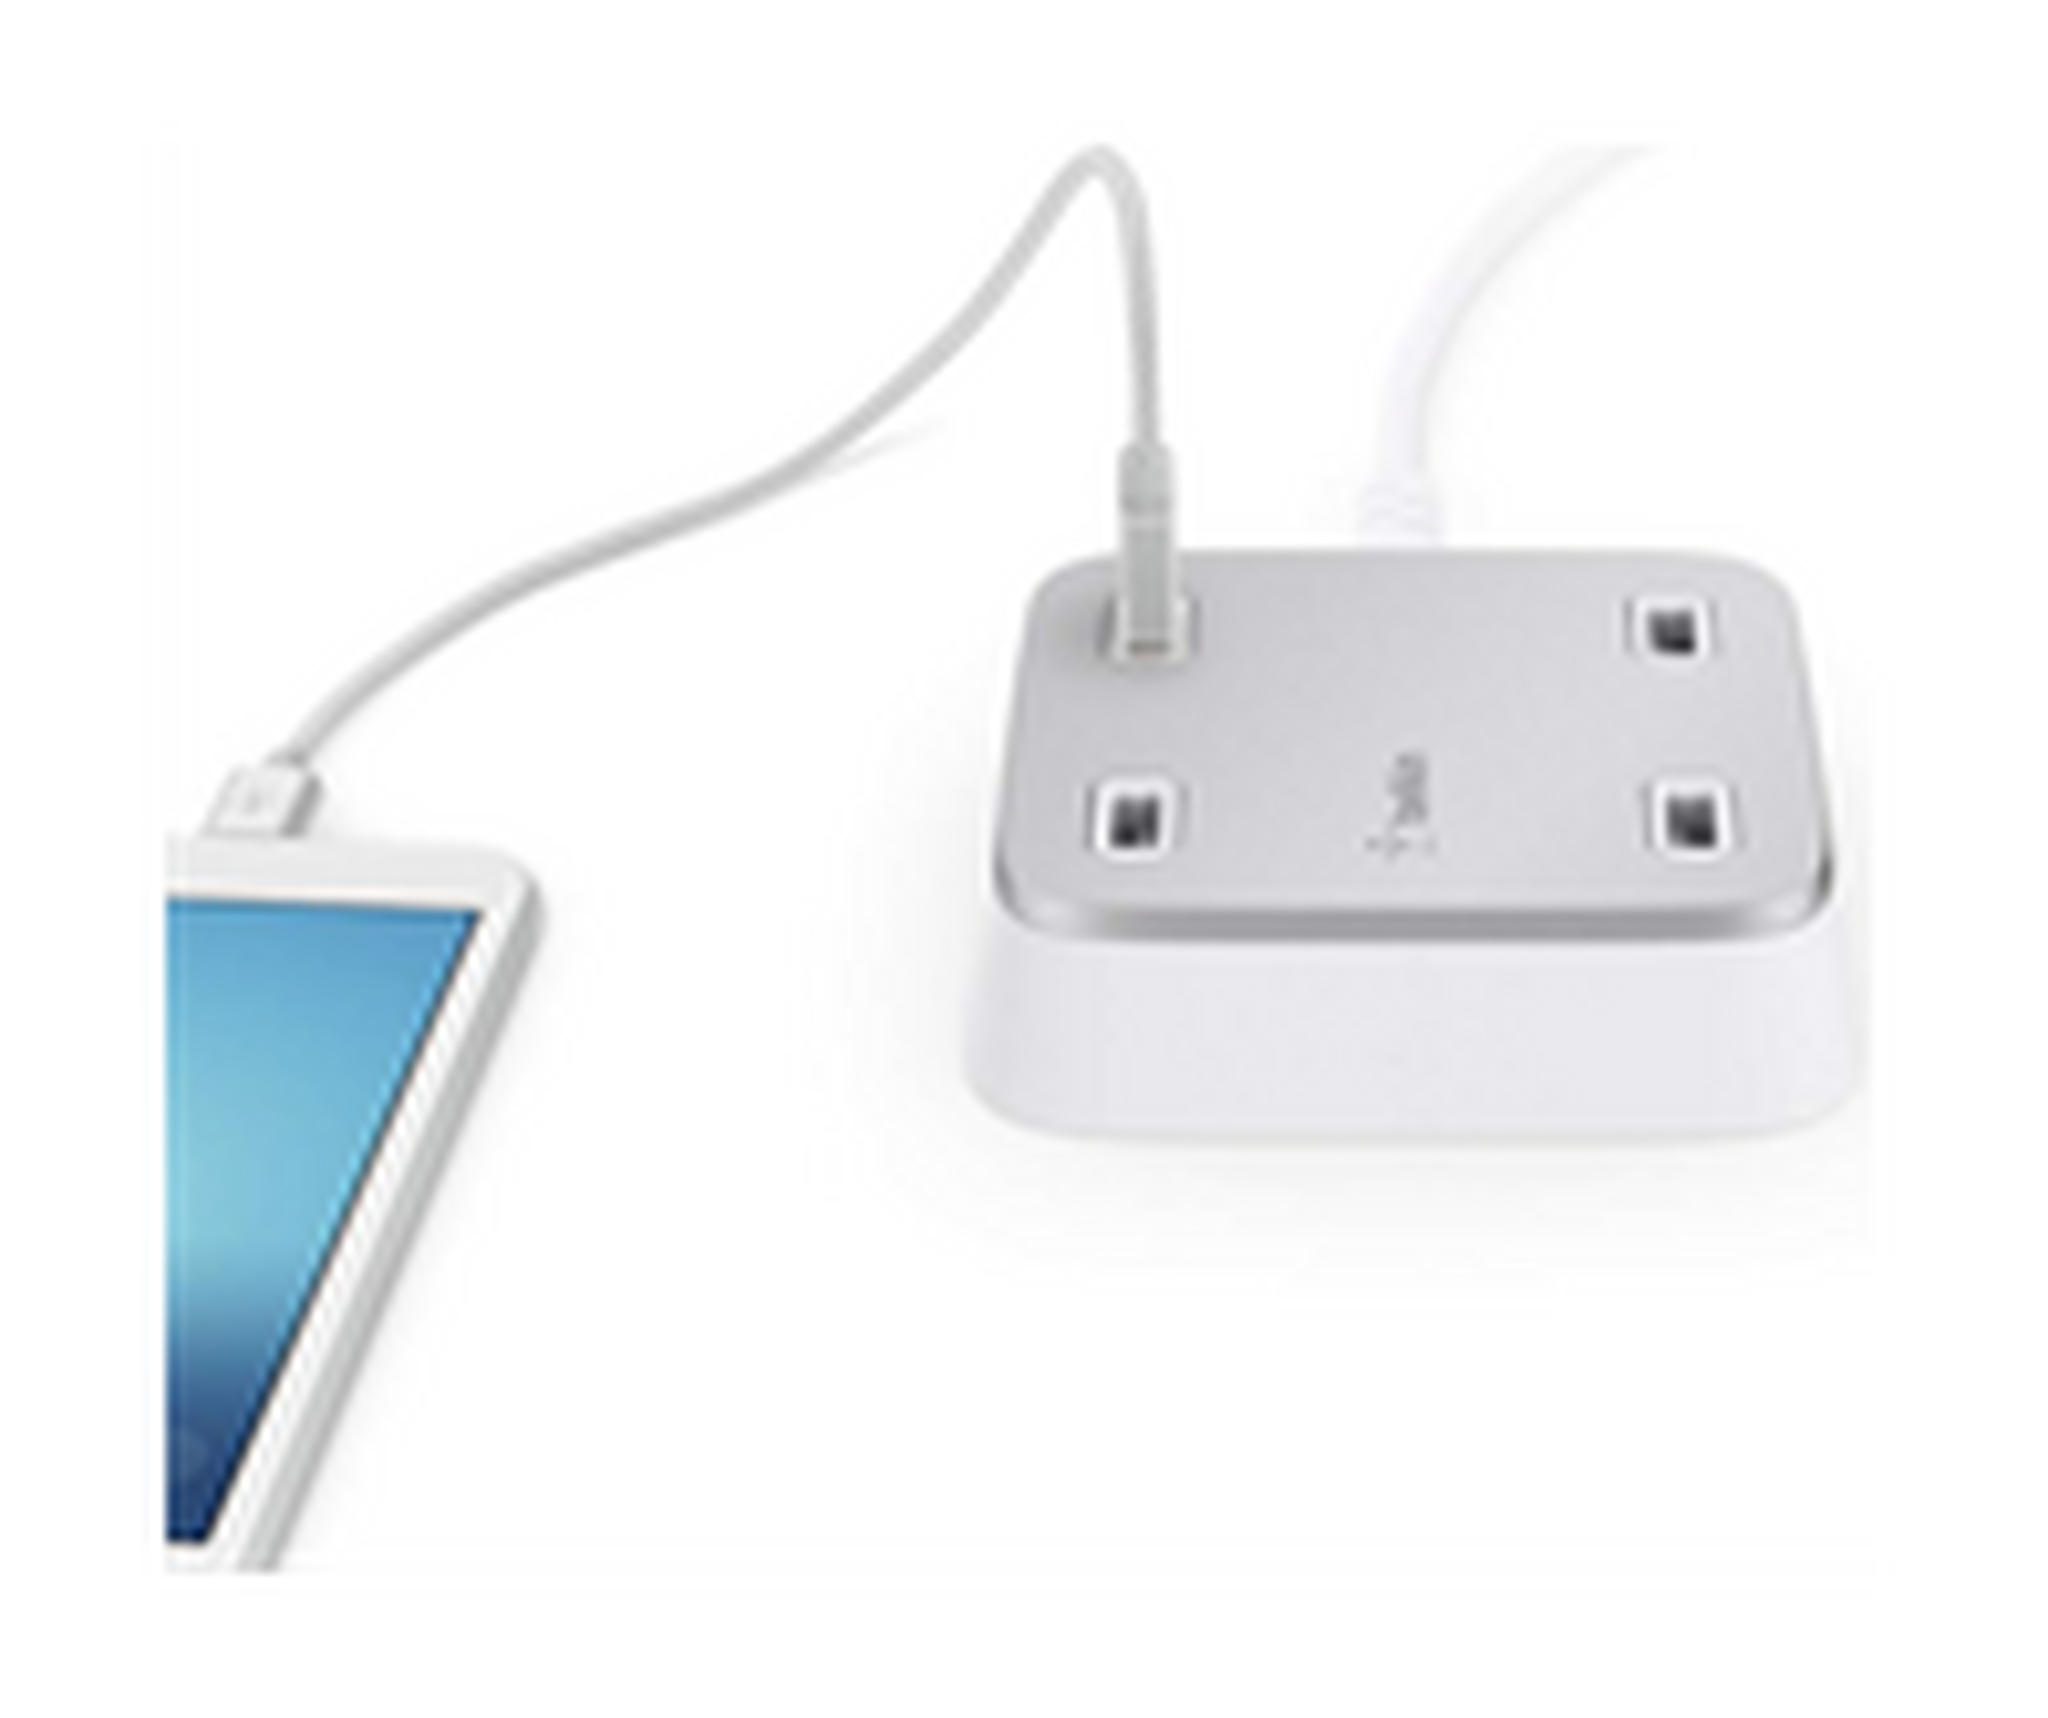 Belkin Family RockStar 4-Port USB Charger (F8M990dr) - White